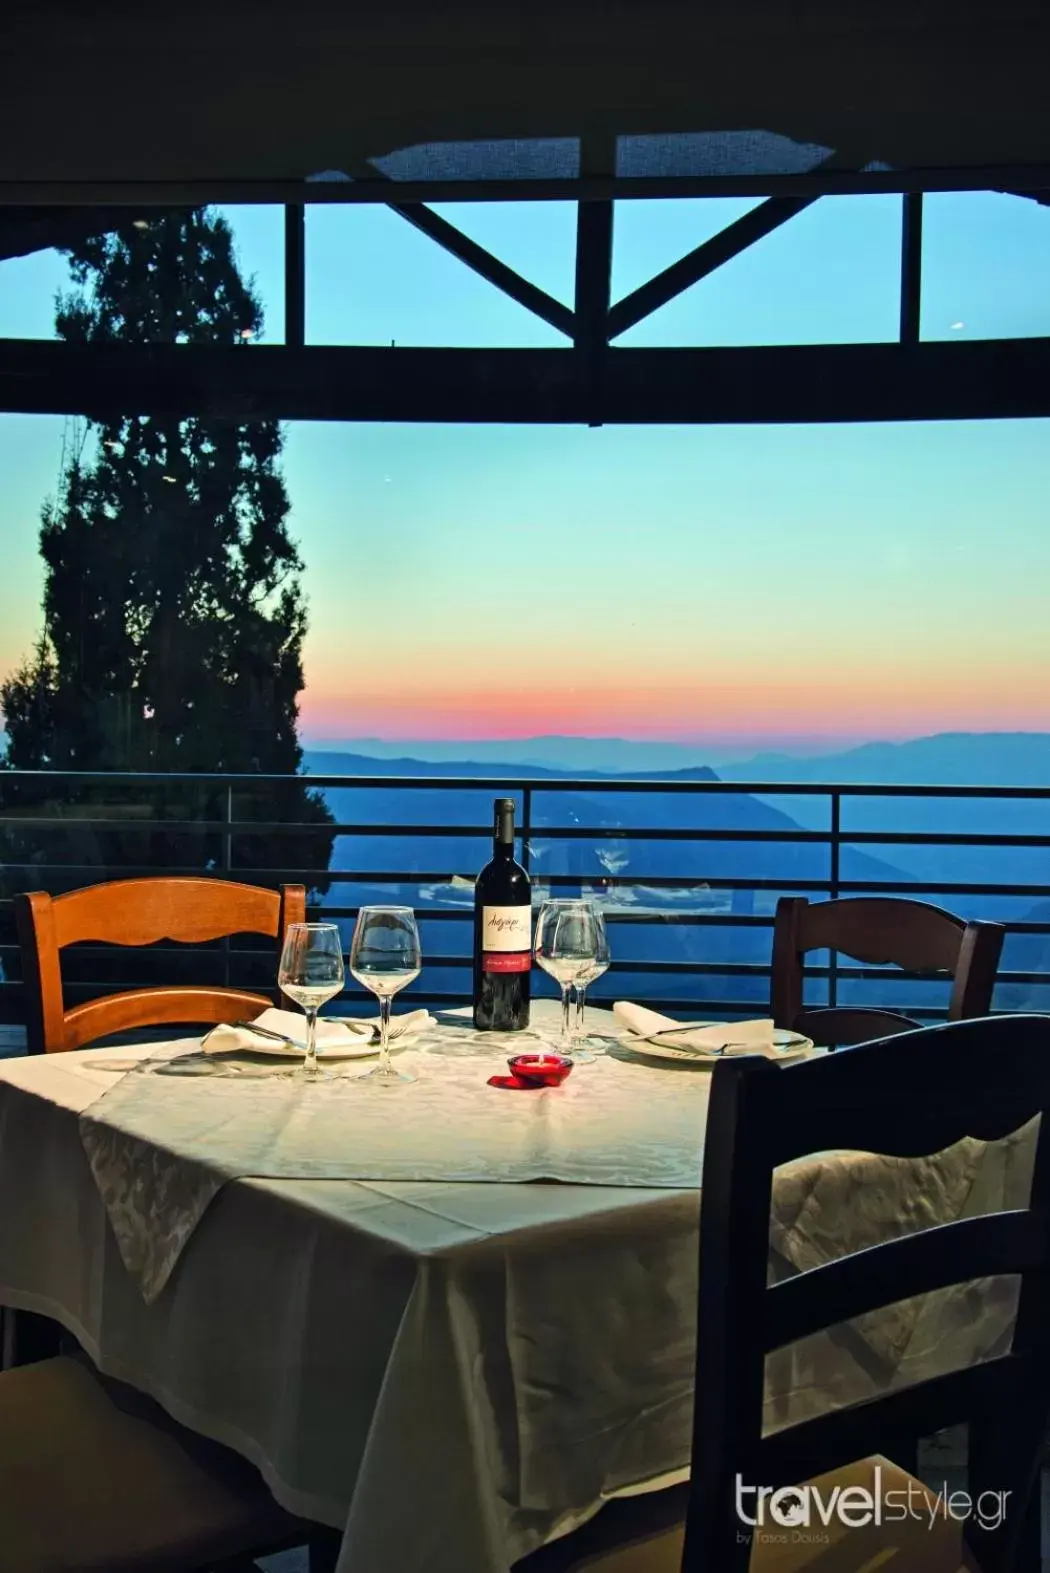 Balcony/Terrace in Domotel Anemolia Mountain Resort